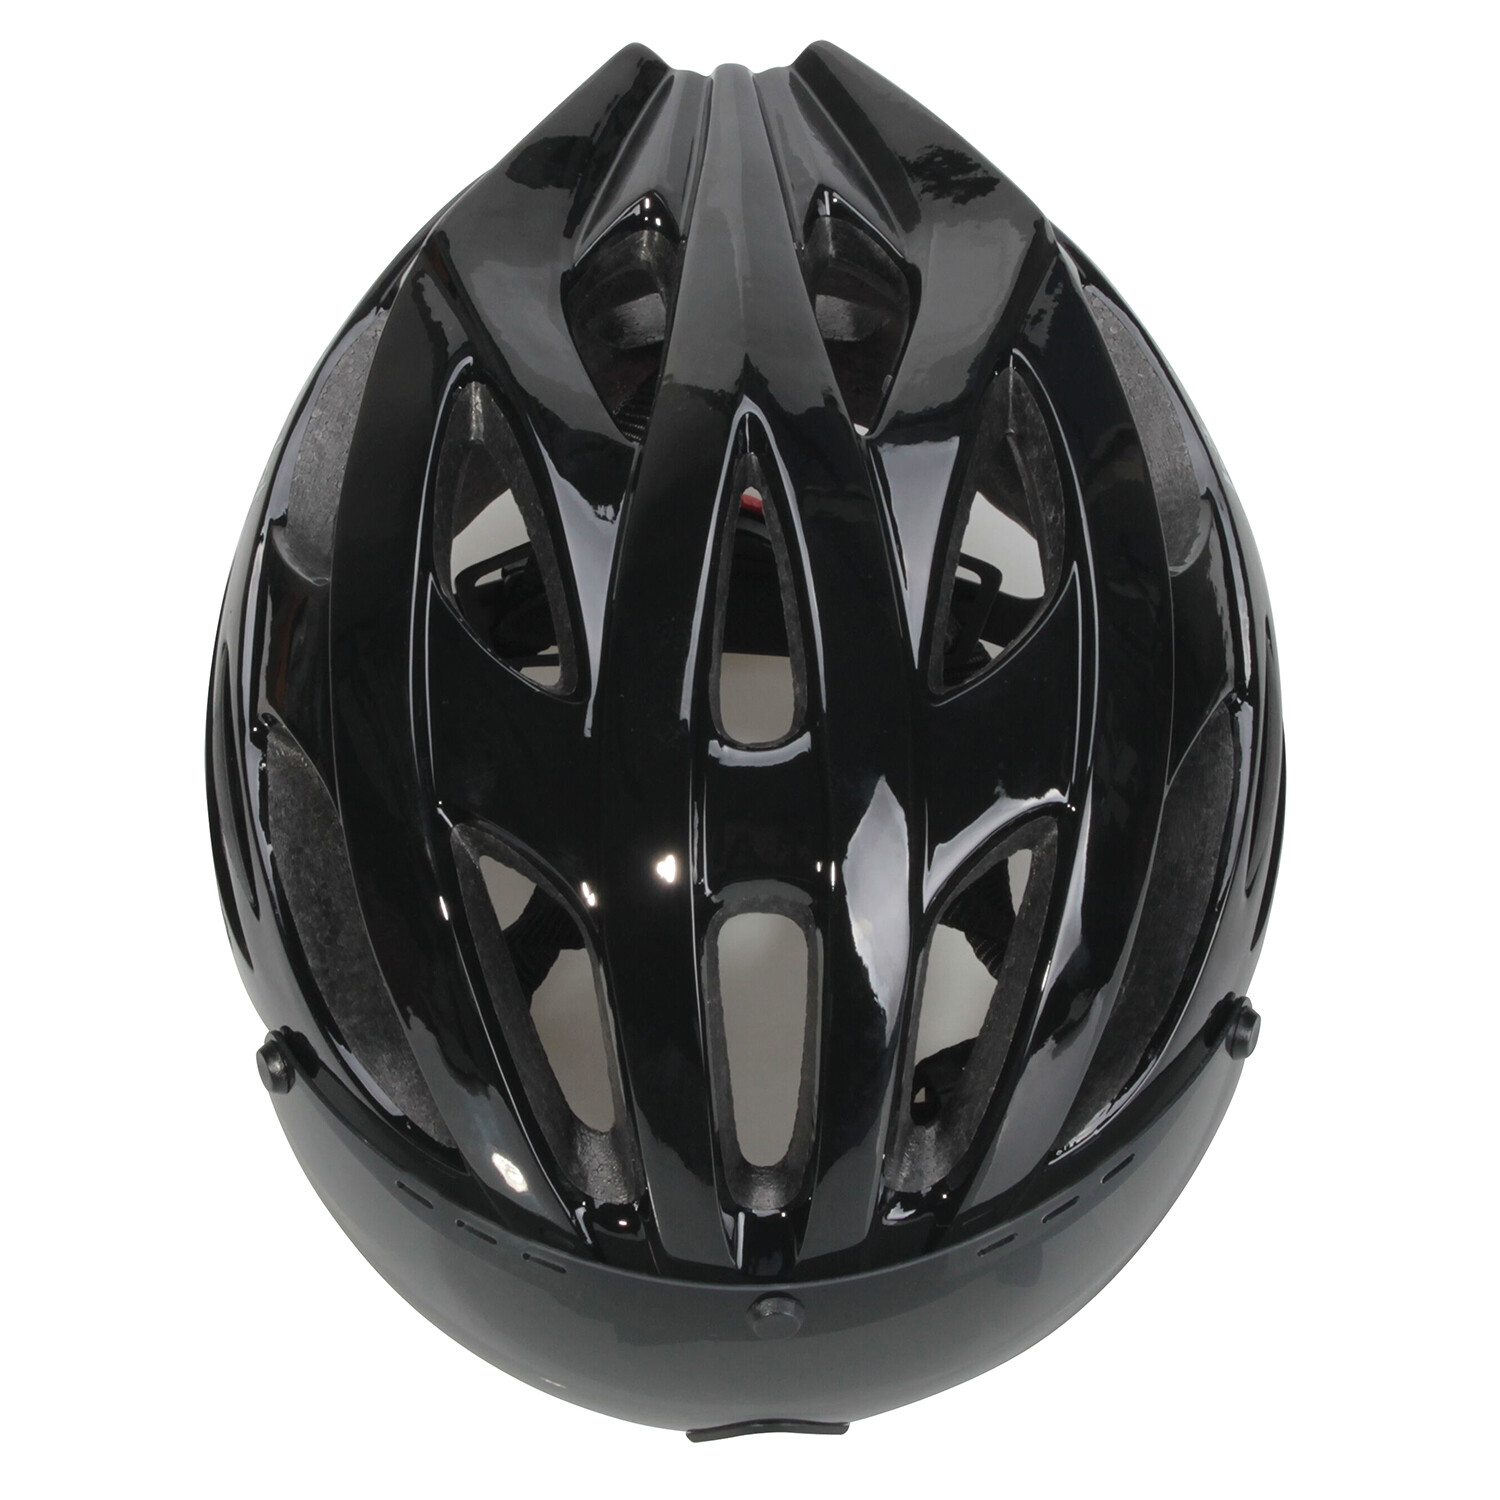 Bike Helmet With Lens Image 3